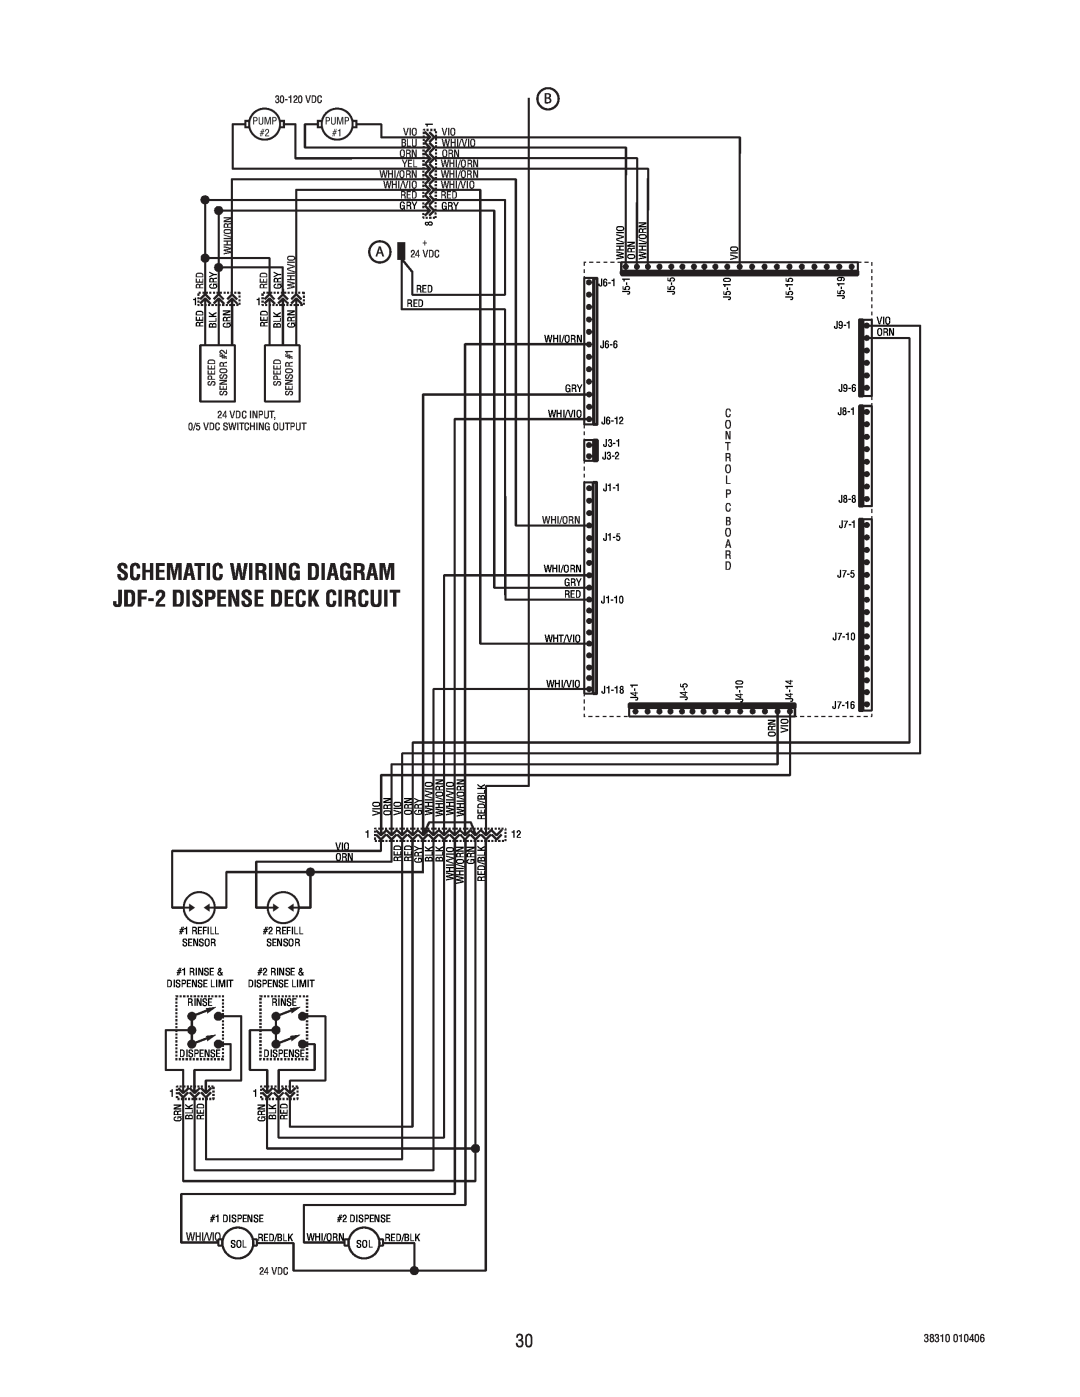 Bunn JDF-2N manual Schematic Wiring Diagram, JDF-2 DISPENSE DECK CIRCUIT 